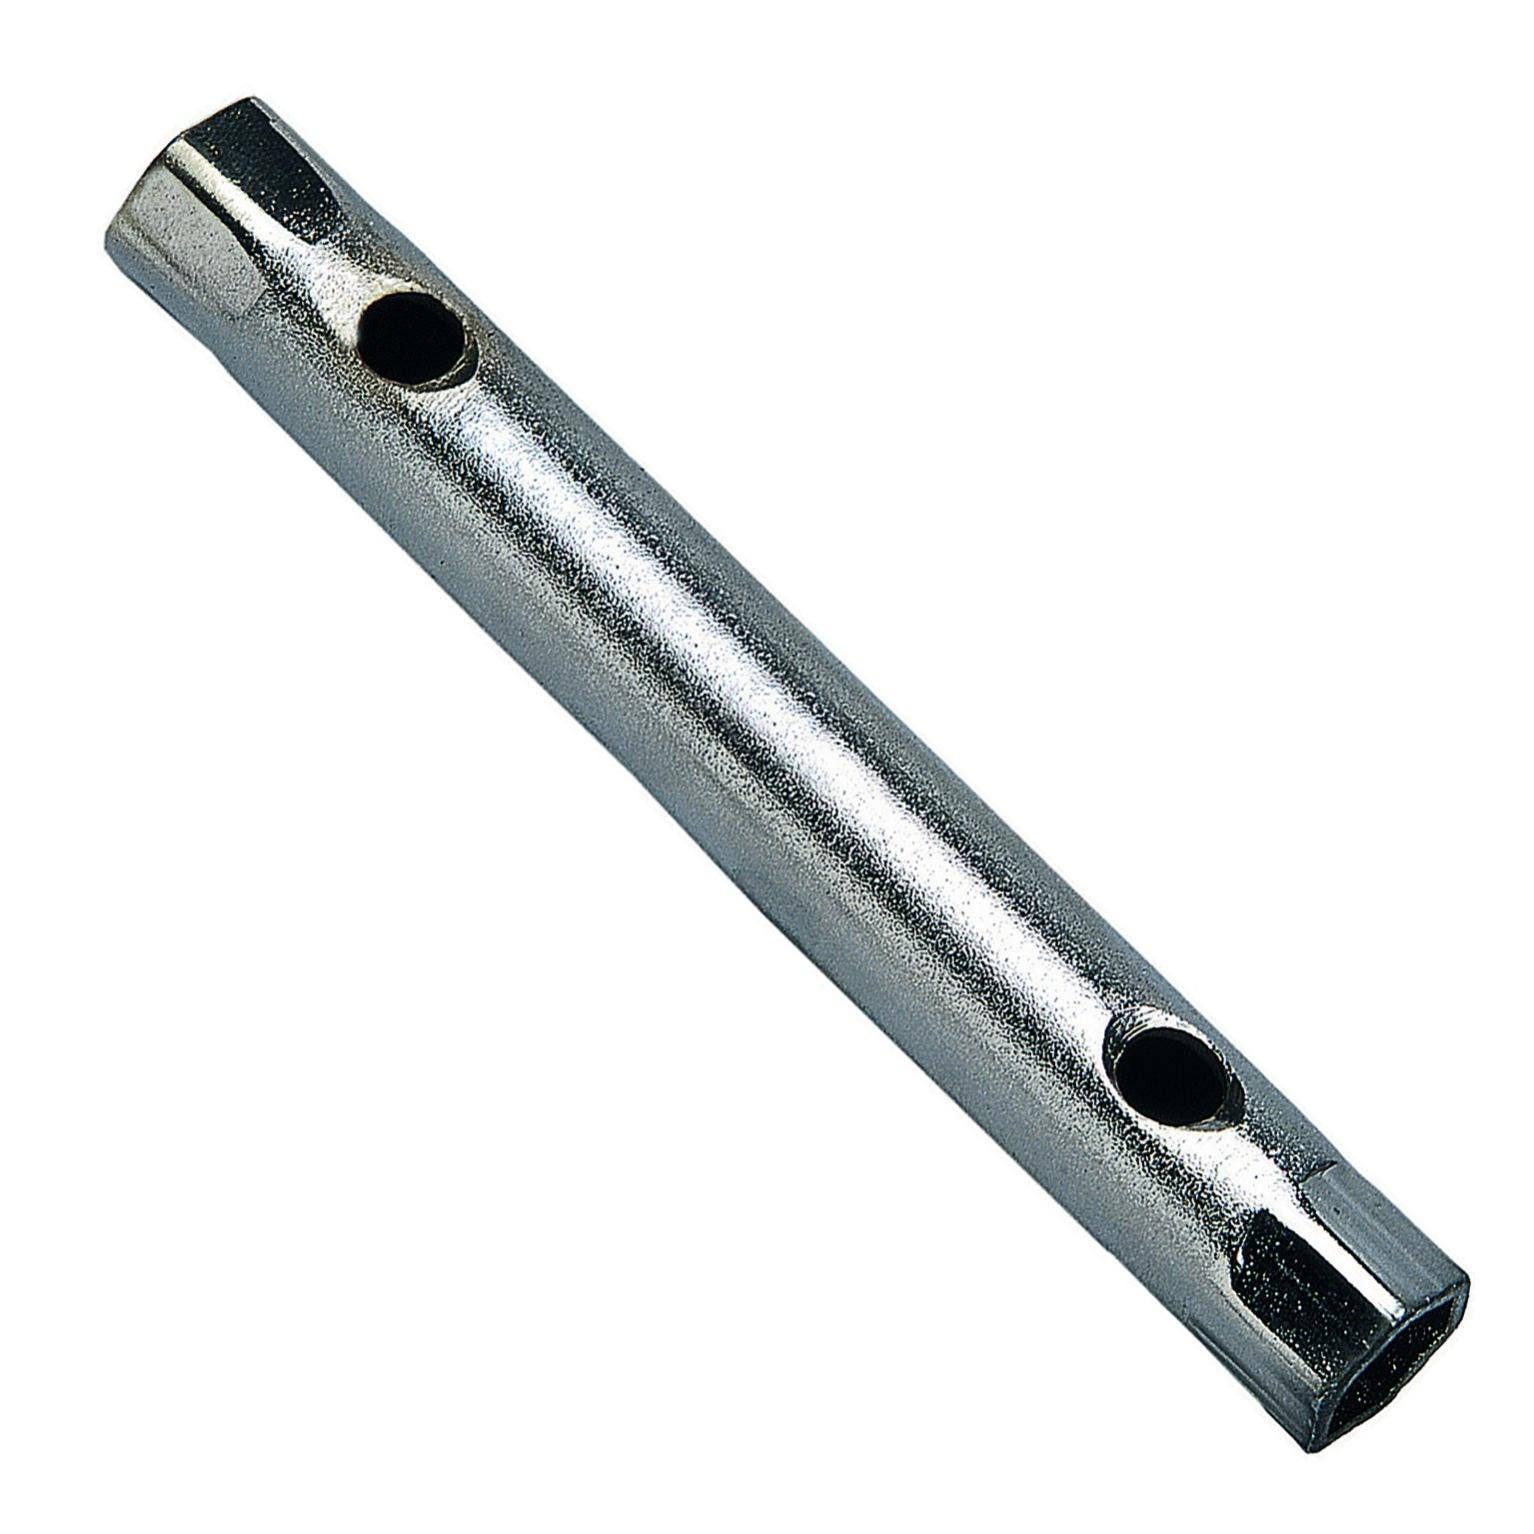 Chiave a tubo esagonale 27 mm in acciaio